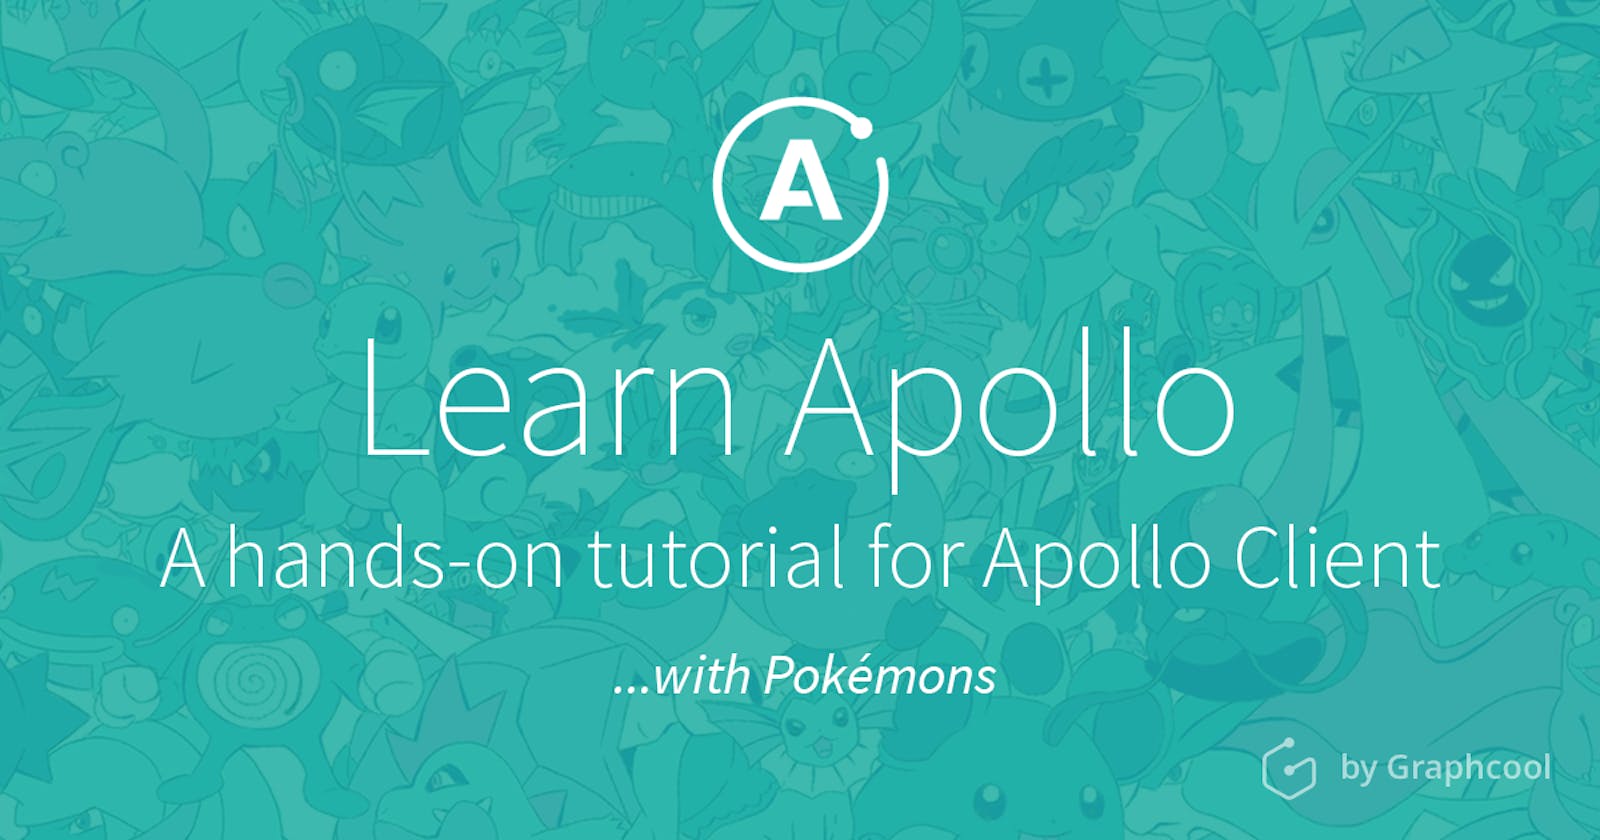 Learn Apollo